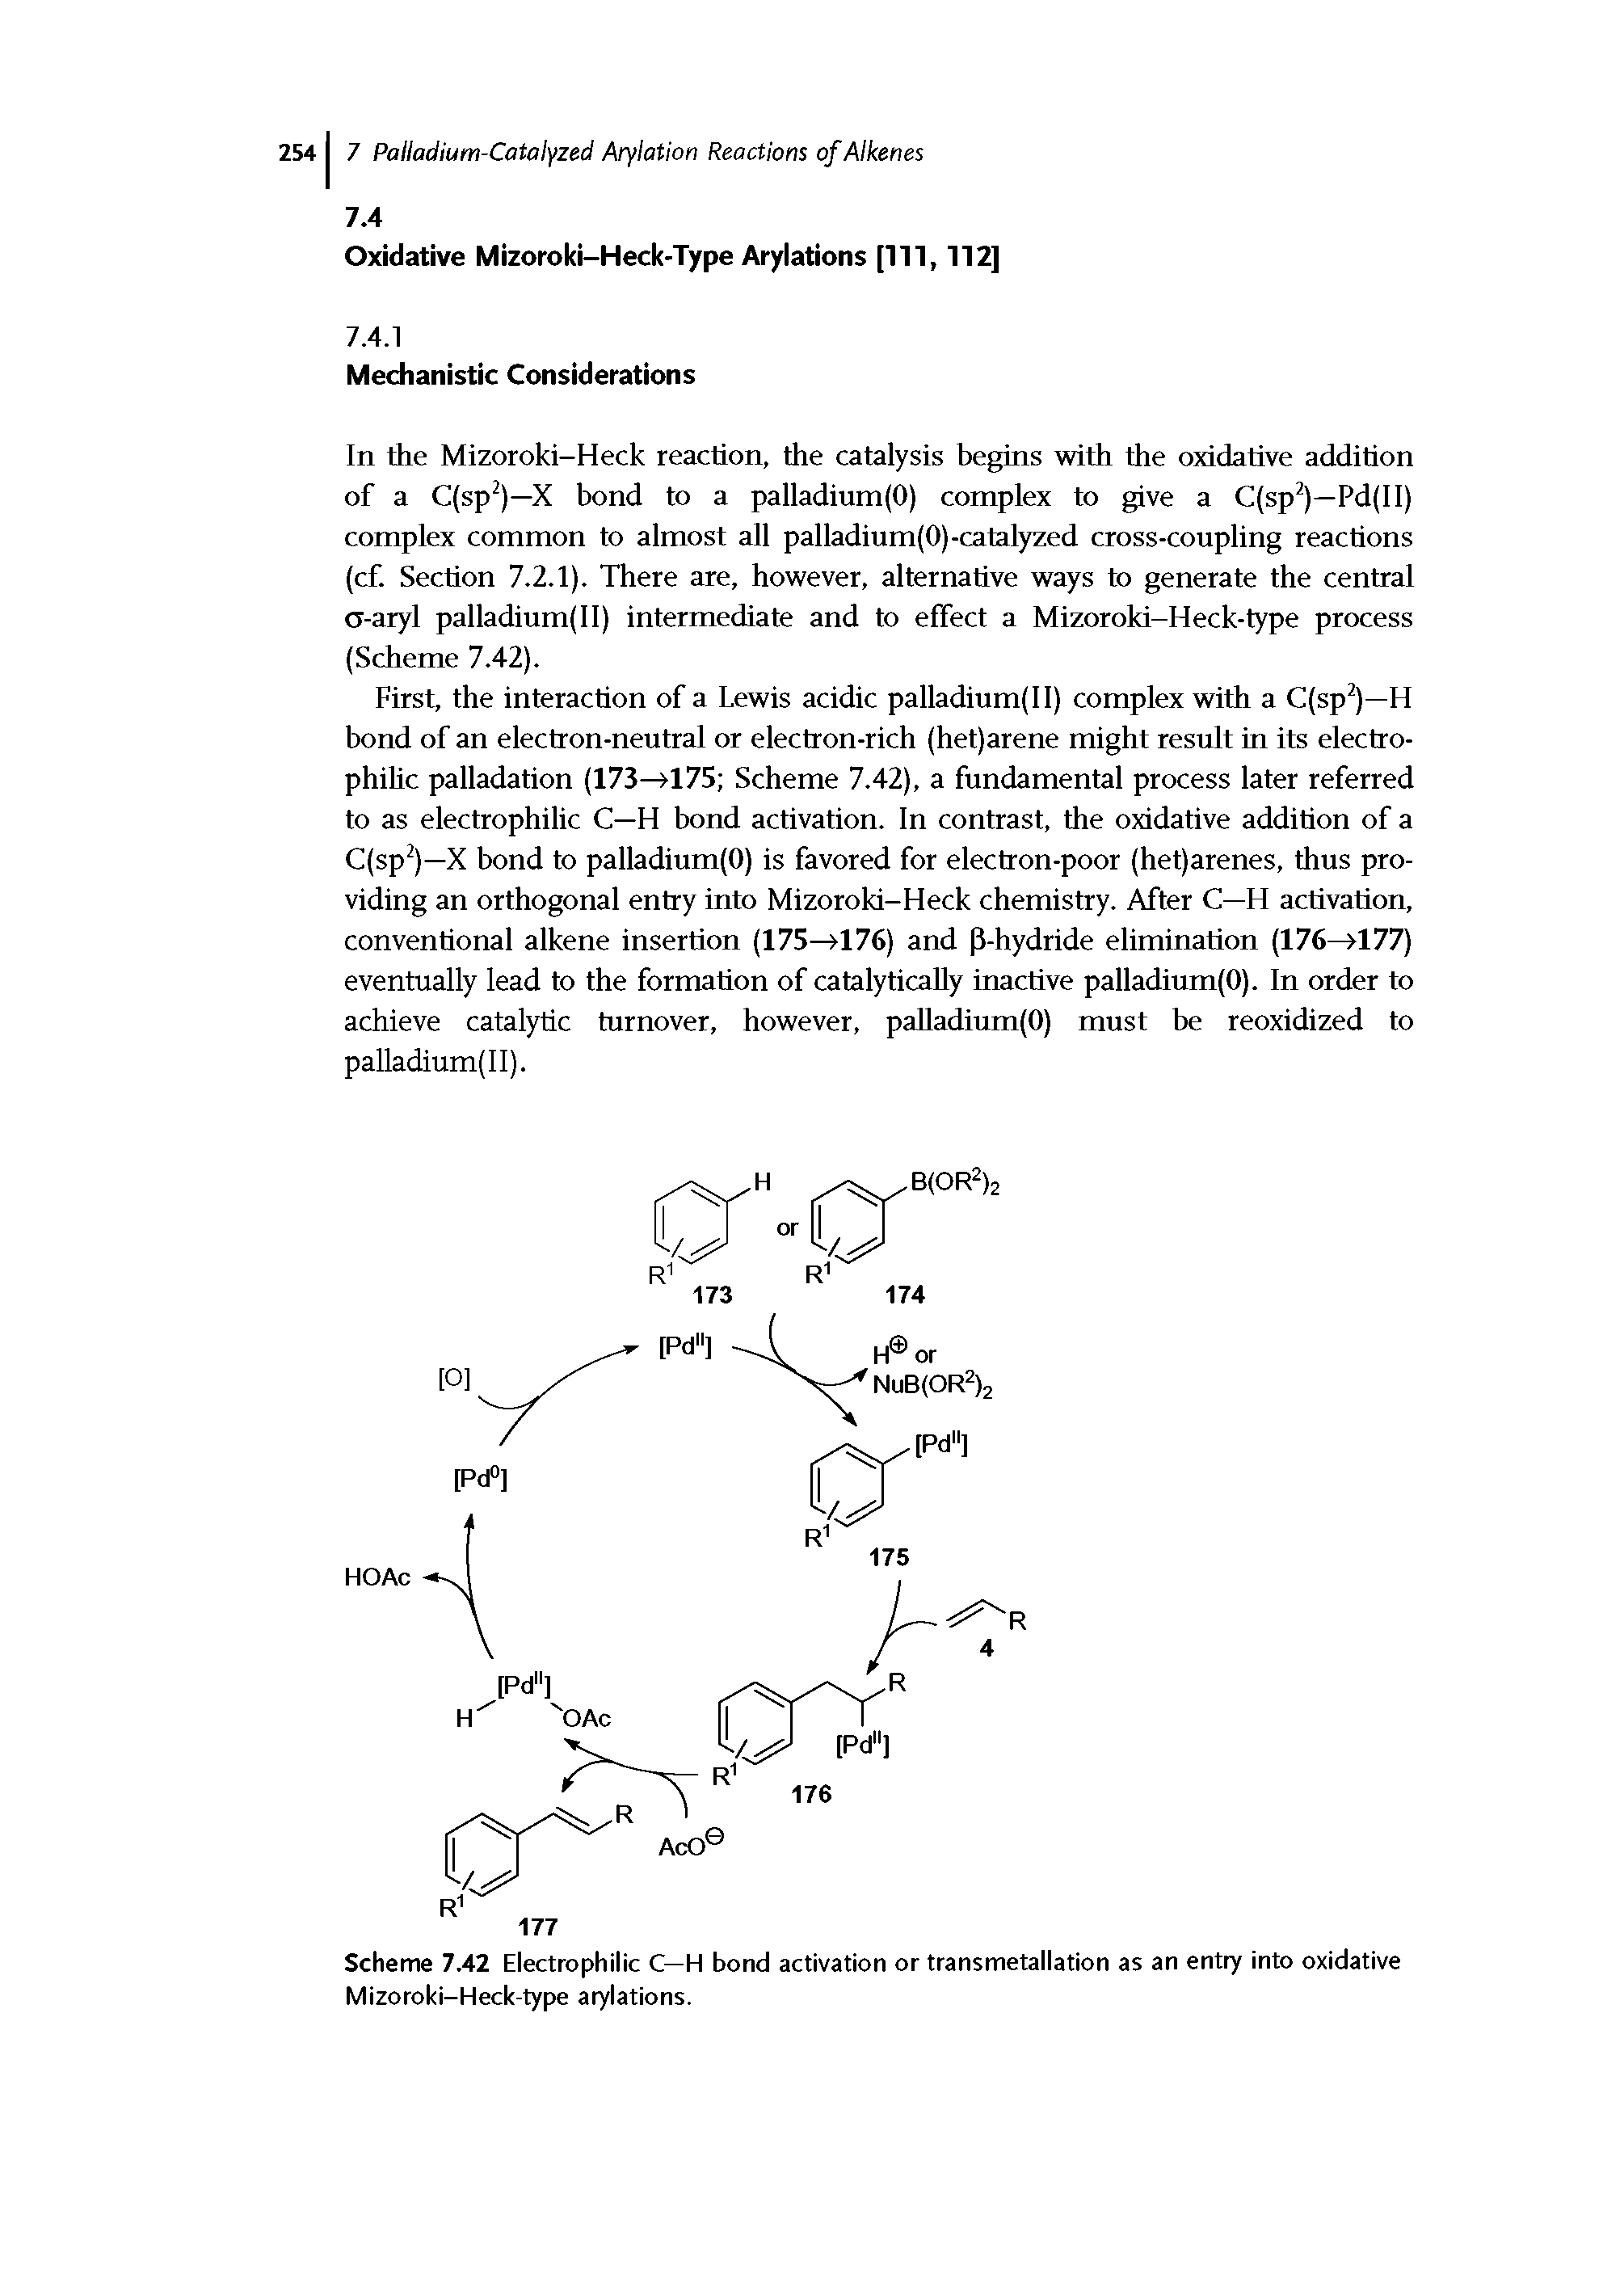 Scheme 7.42 Electrophilic C—H bond activation or transmetallation as an entry into oxidative Mizoroki-Heck-type arylations.